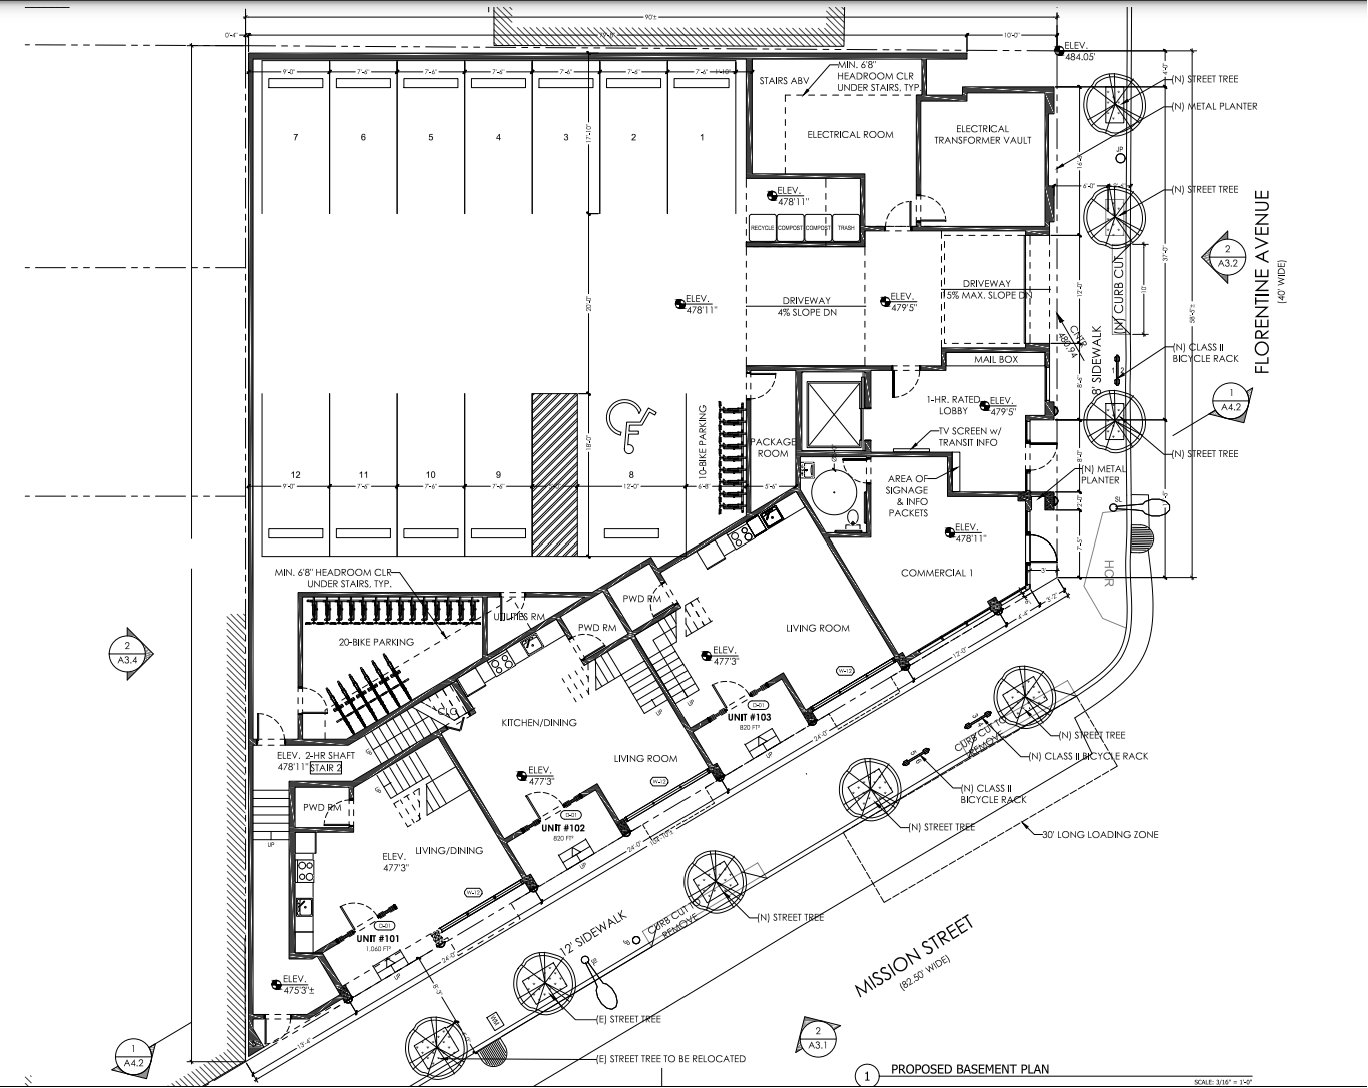 5425 Mission Street Proposed Basement Plan